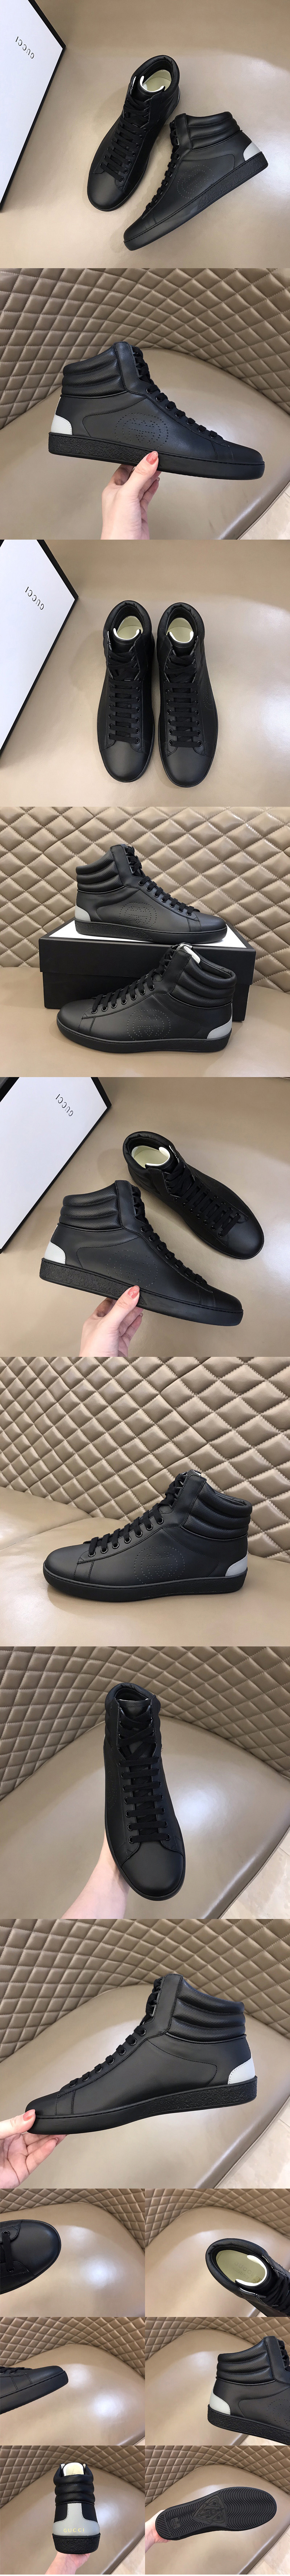 Replica Gucci 625672 Men's high-top Ace sneaker in Black leather